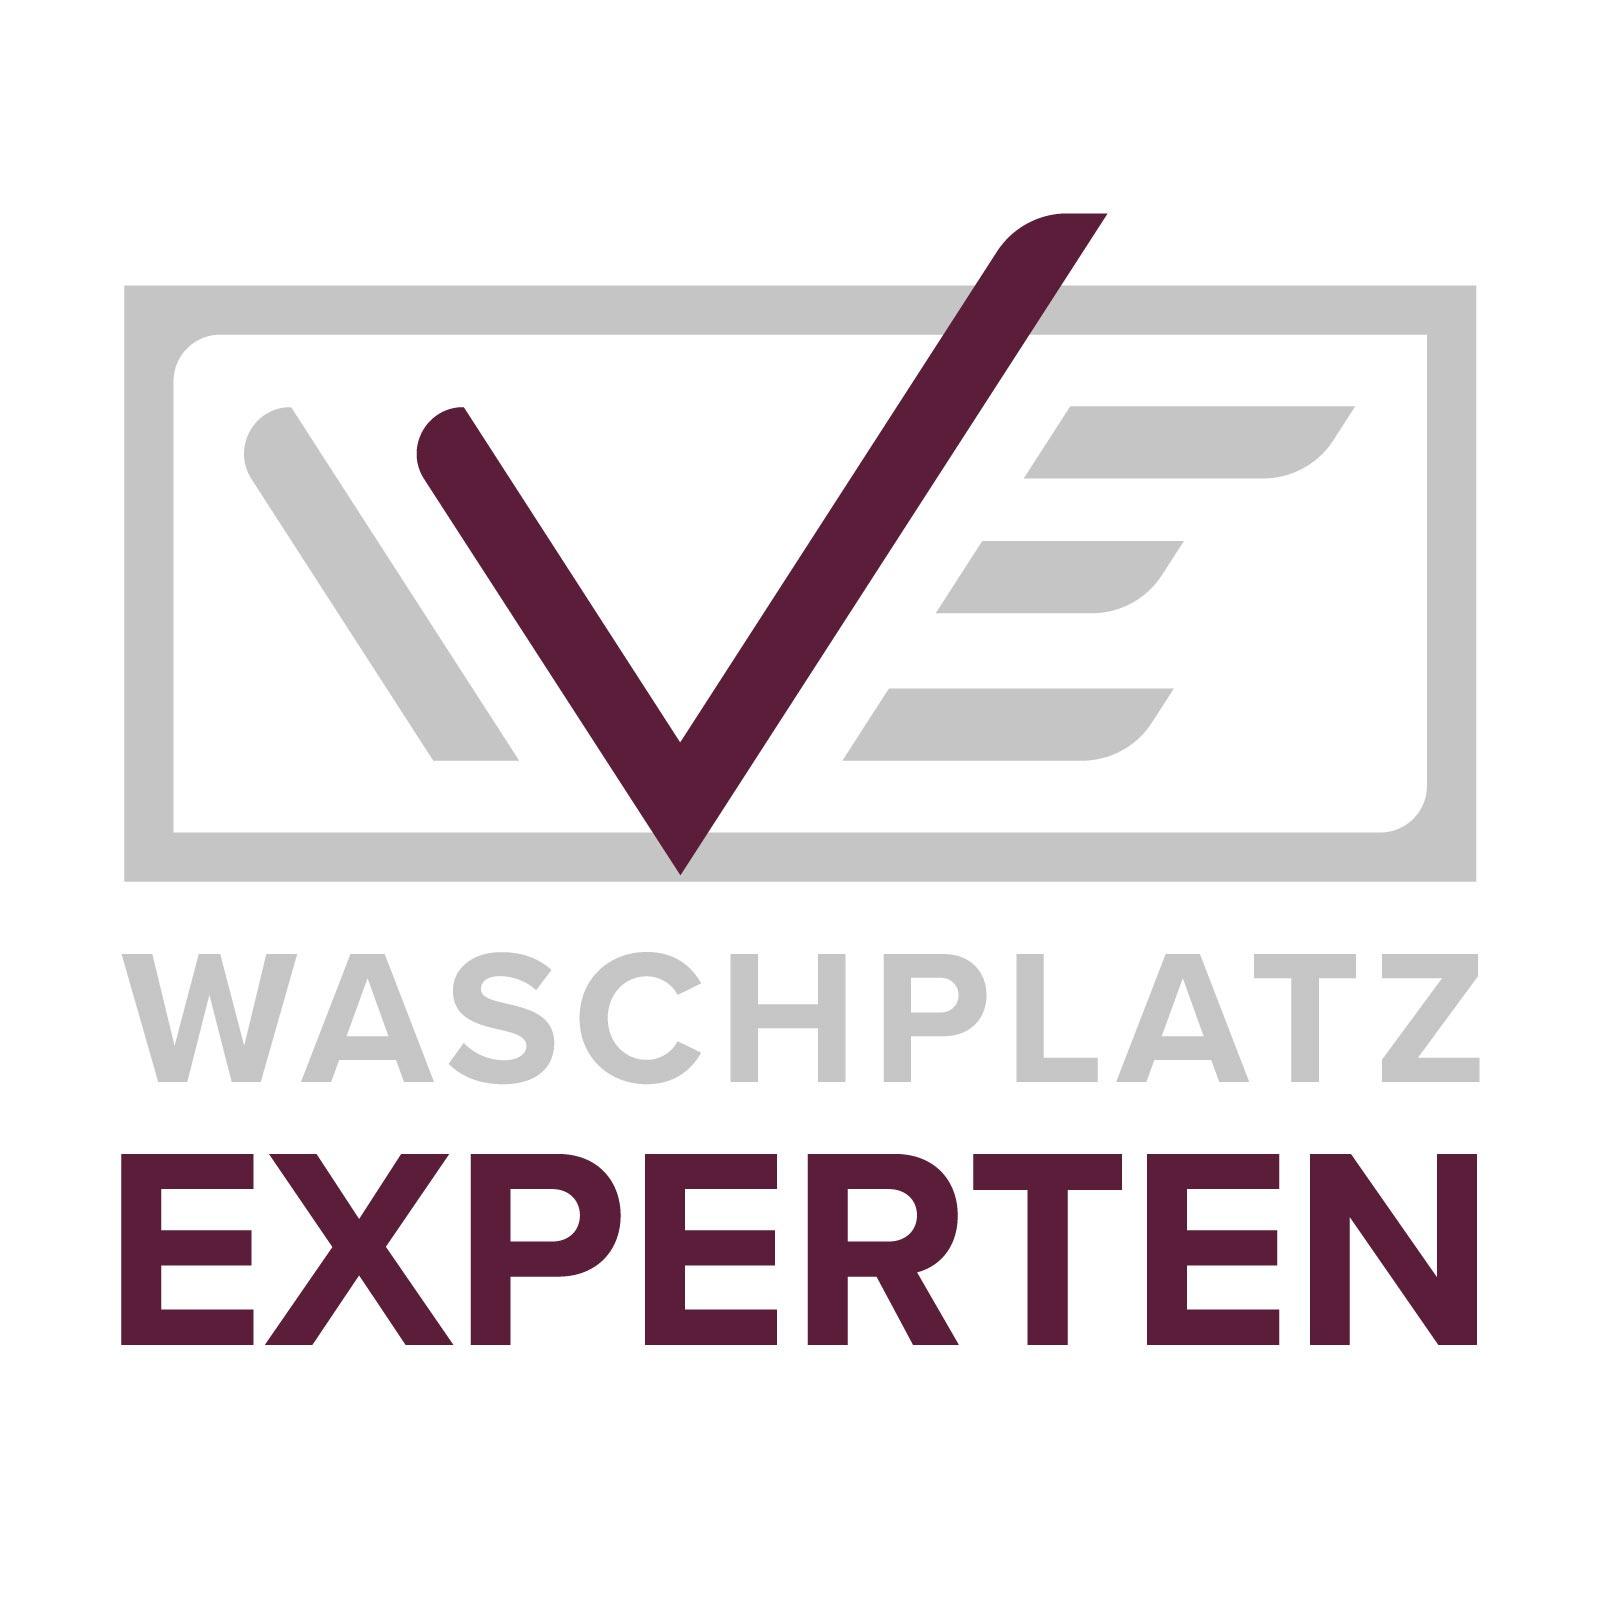 Waschplatz-Experten Zentrale & Mein Bad Direktvertrieb in Ludwigsburg in Württemberg - Logo